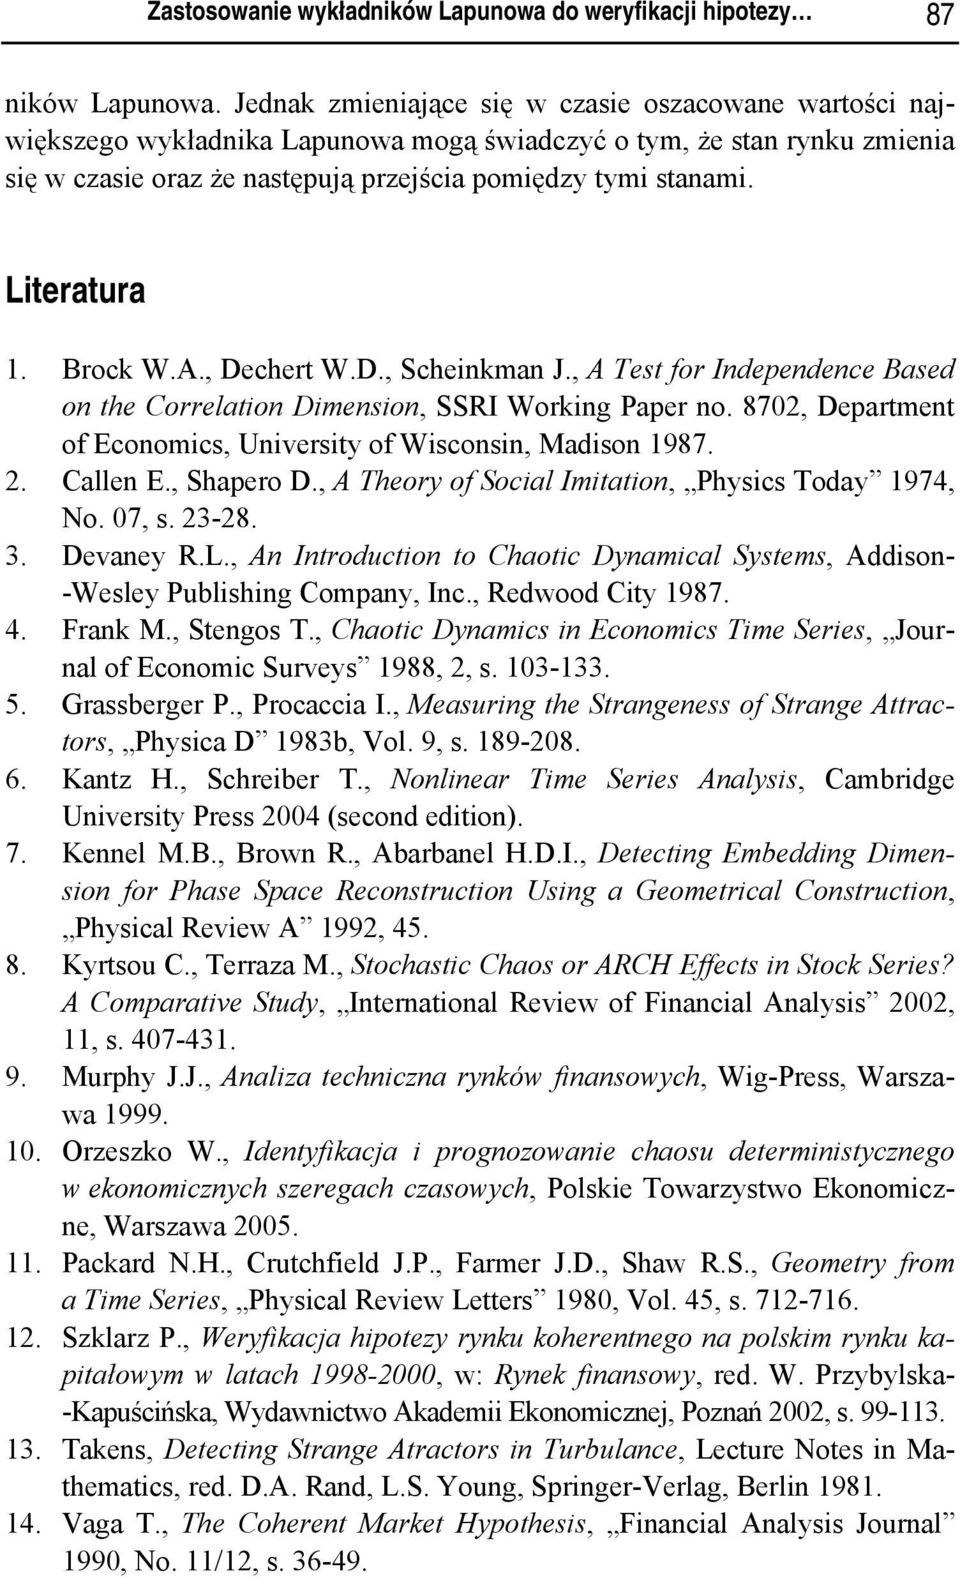 Literatura 1. Brock W.A., Dechert W.D., Scheinkman J., A Test for Independence Based on the Correlation Dimension, SSRI Working Paper no.